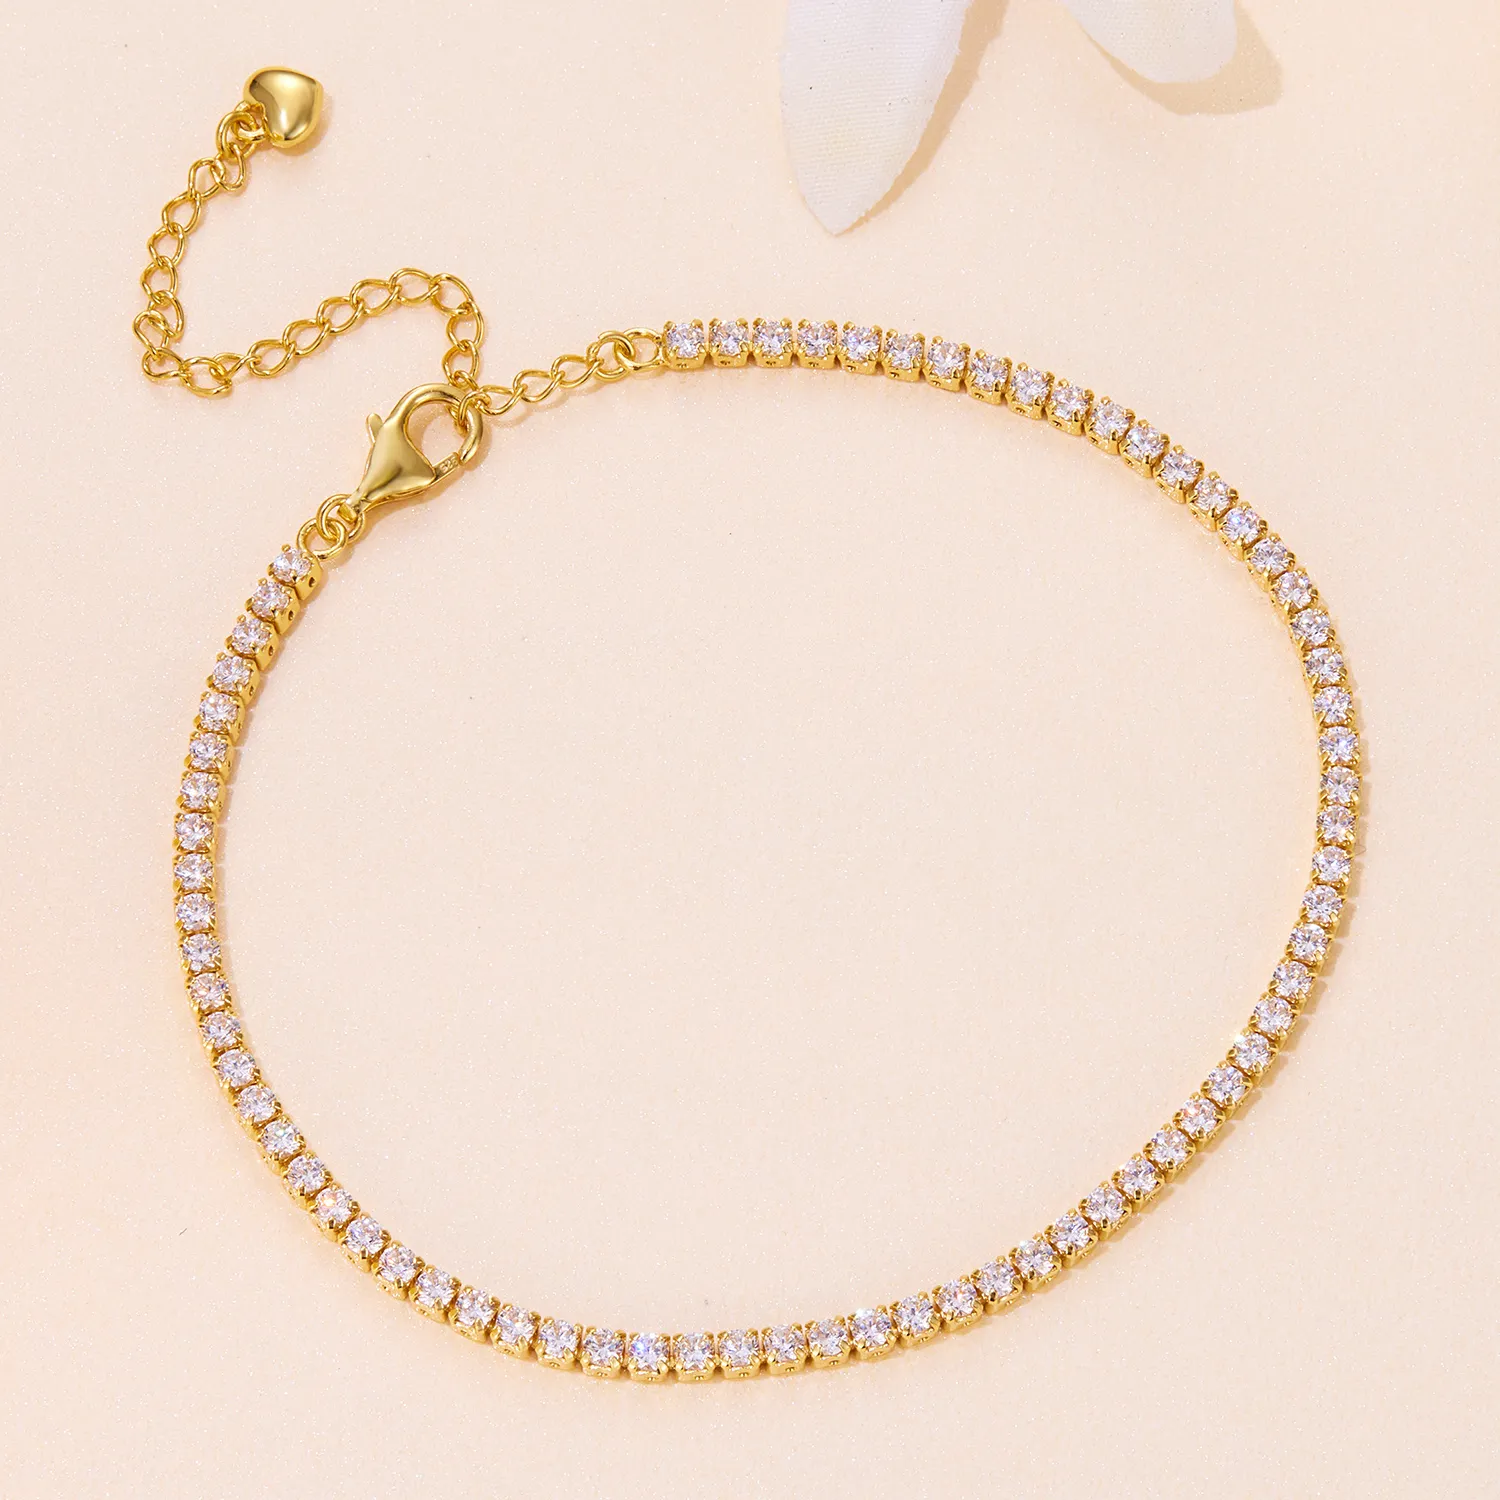 Brățară cu lanț Pandora Style din aur, cu zirconiu exquisit - BSB097-B